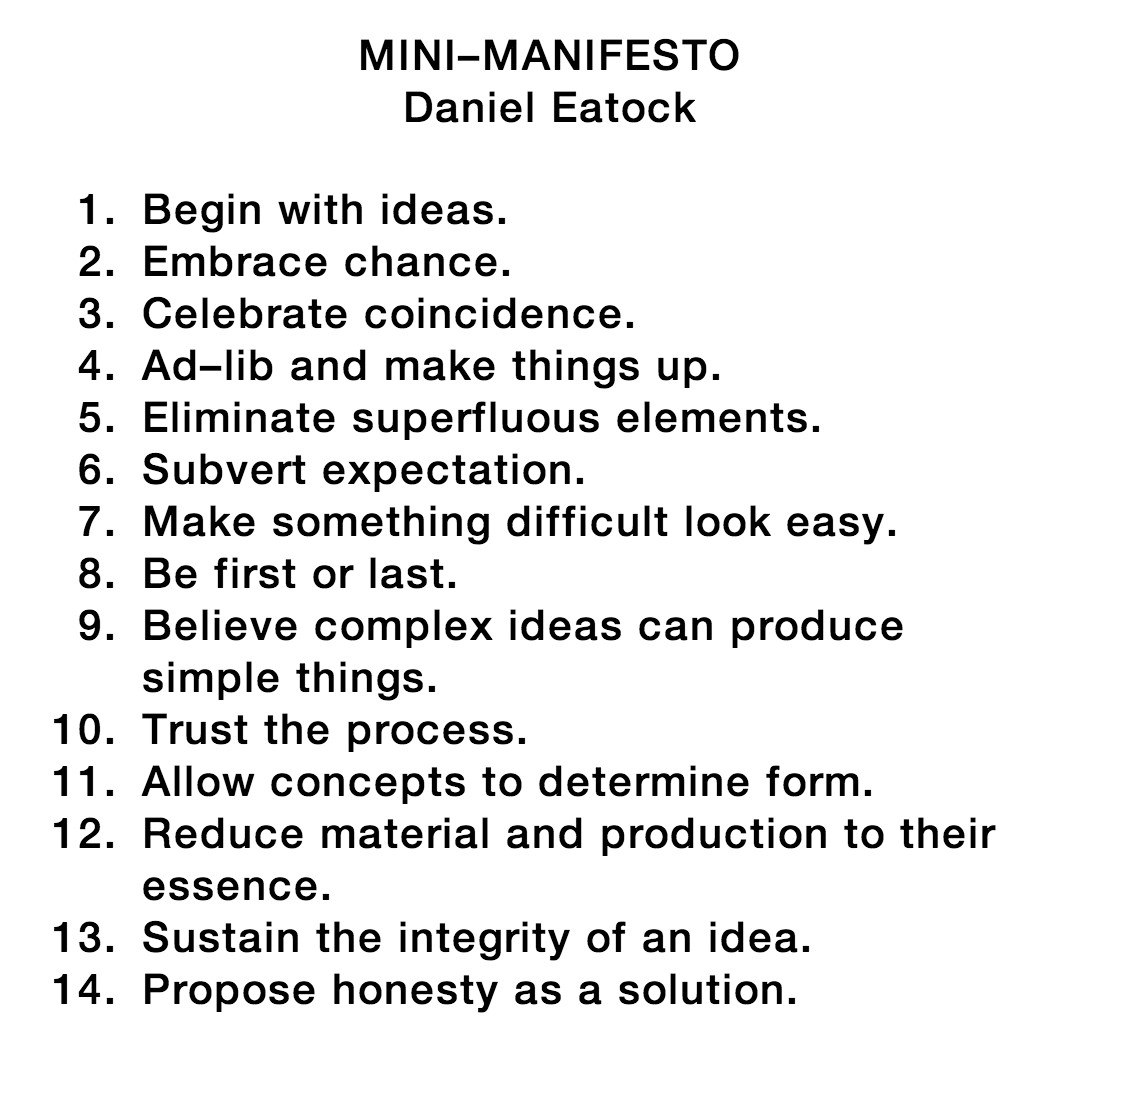 daniel-eatock-mini-manifesto.png